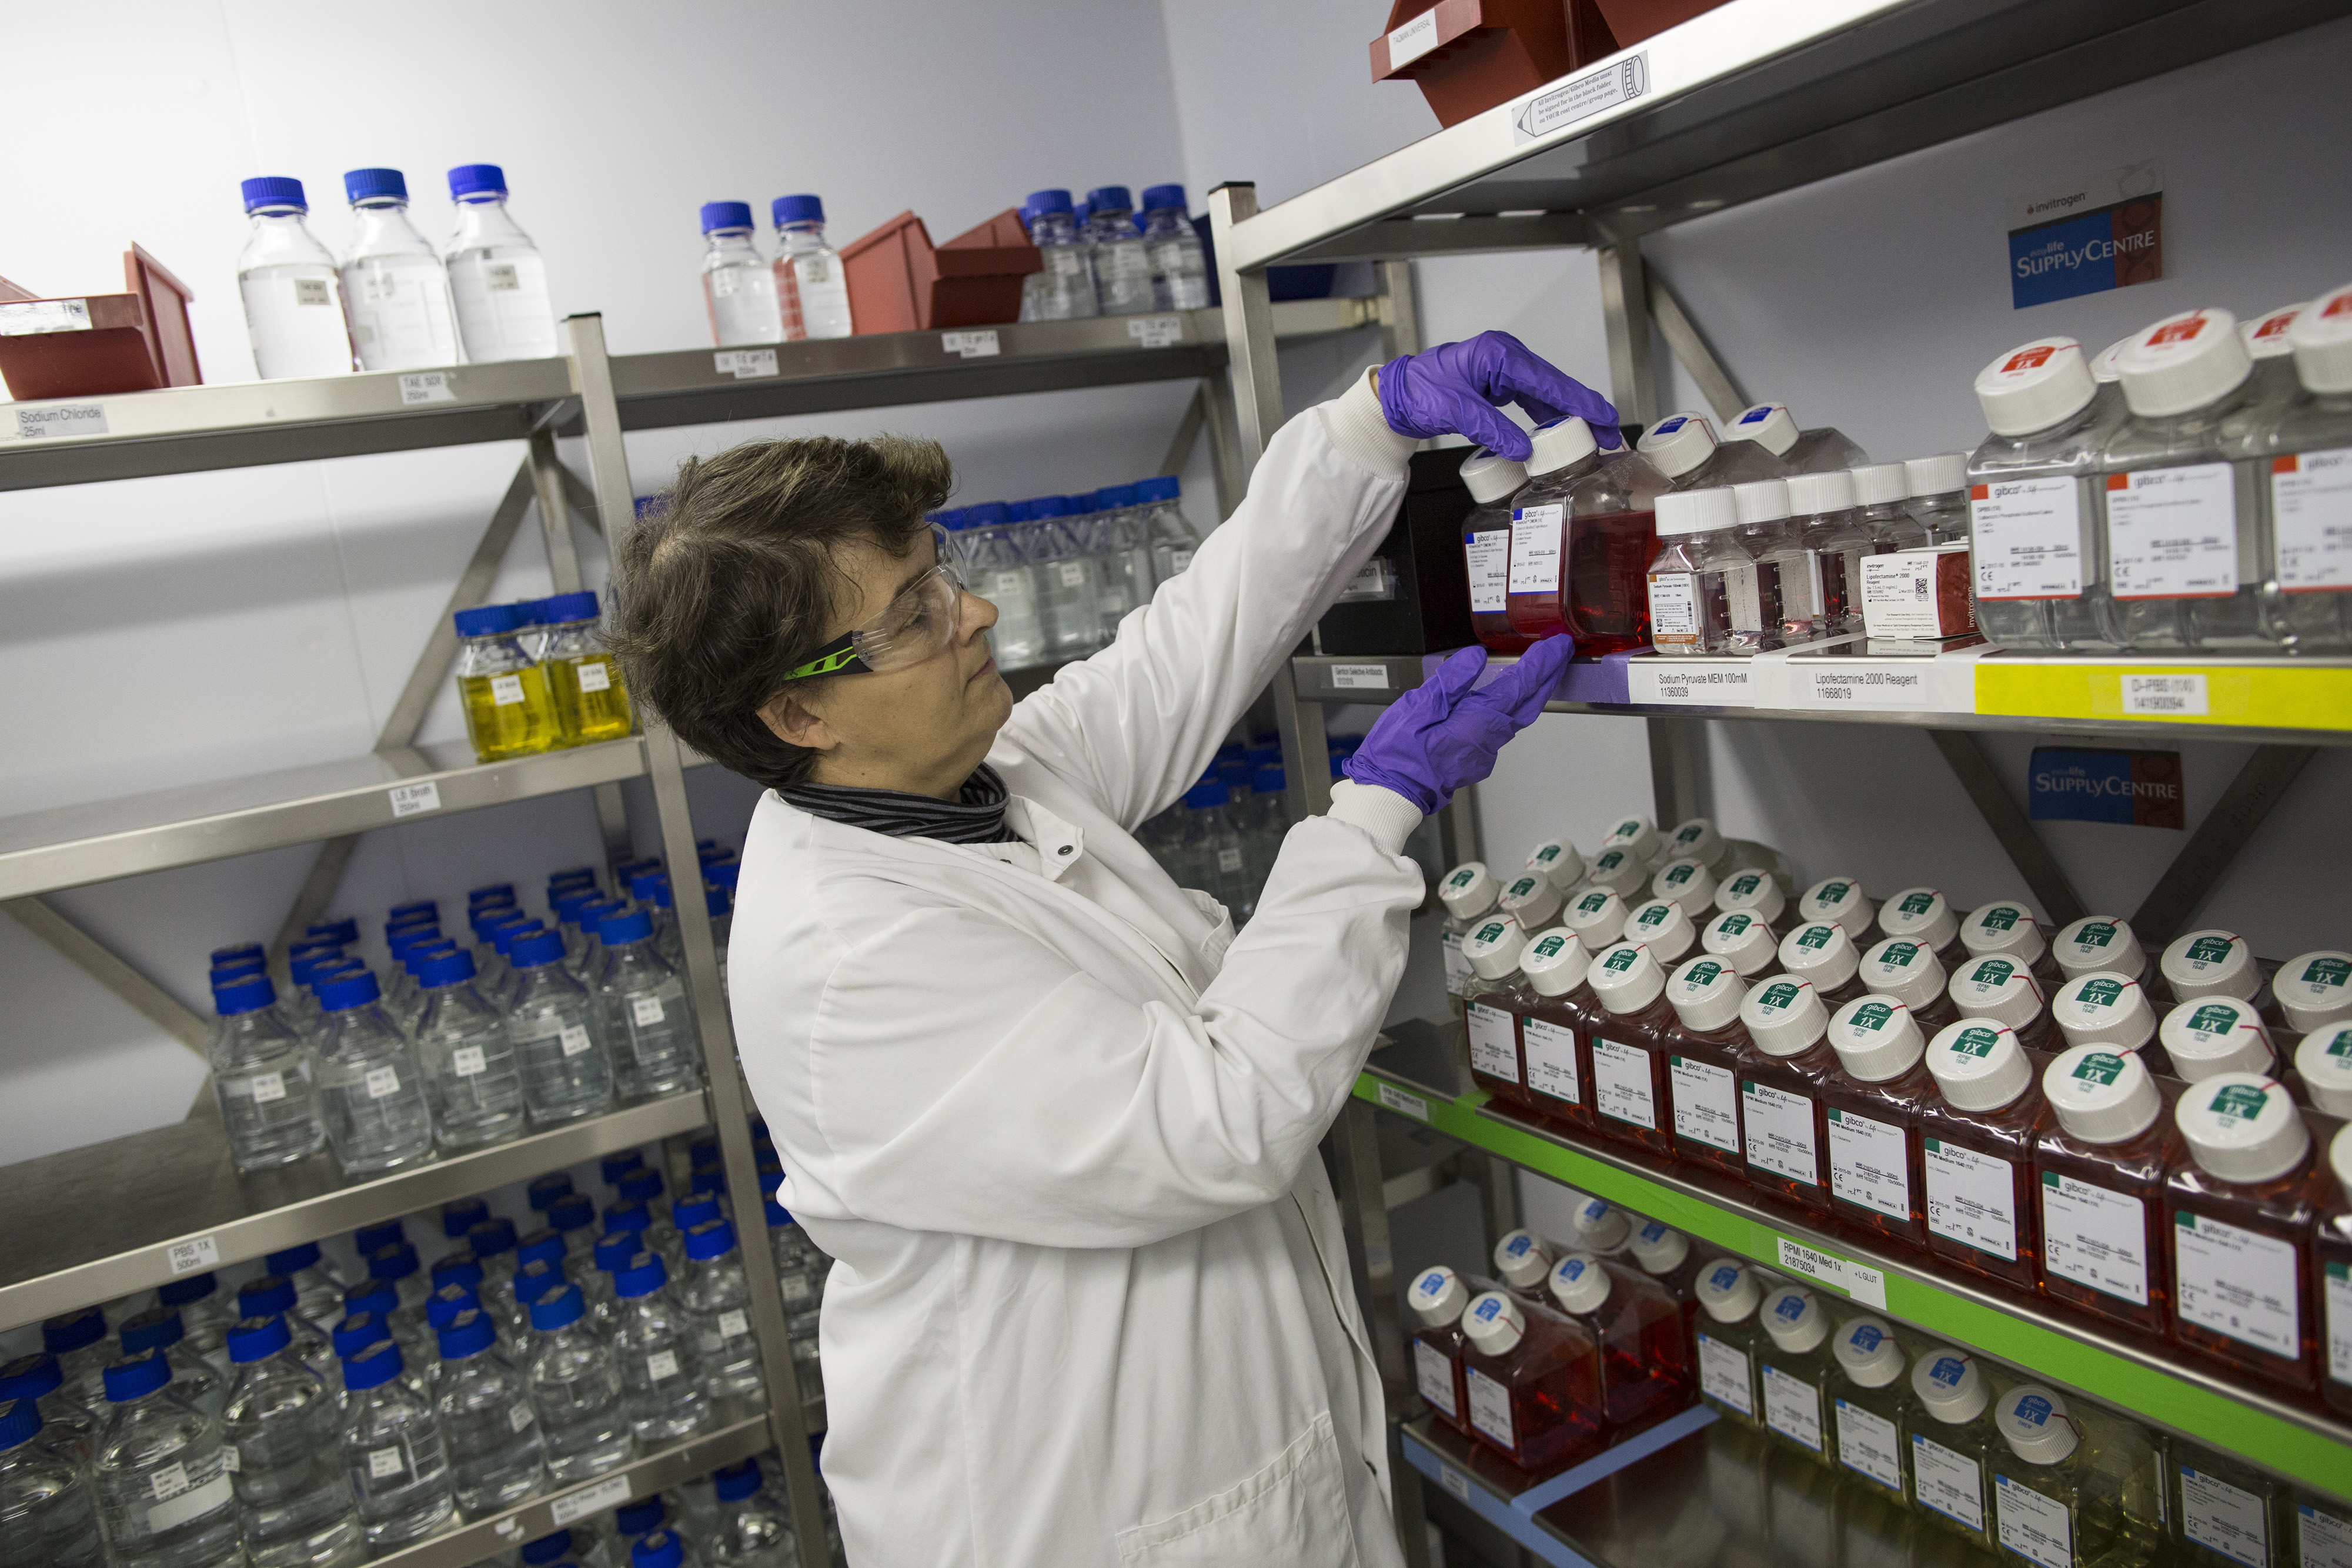 A scientist checks laboratory supplies in a storage closet.